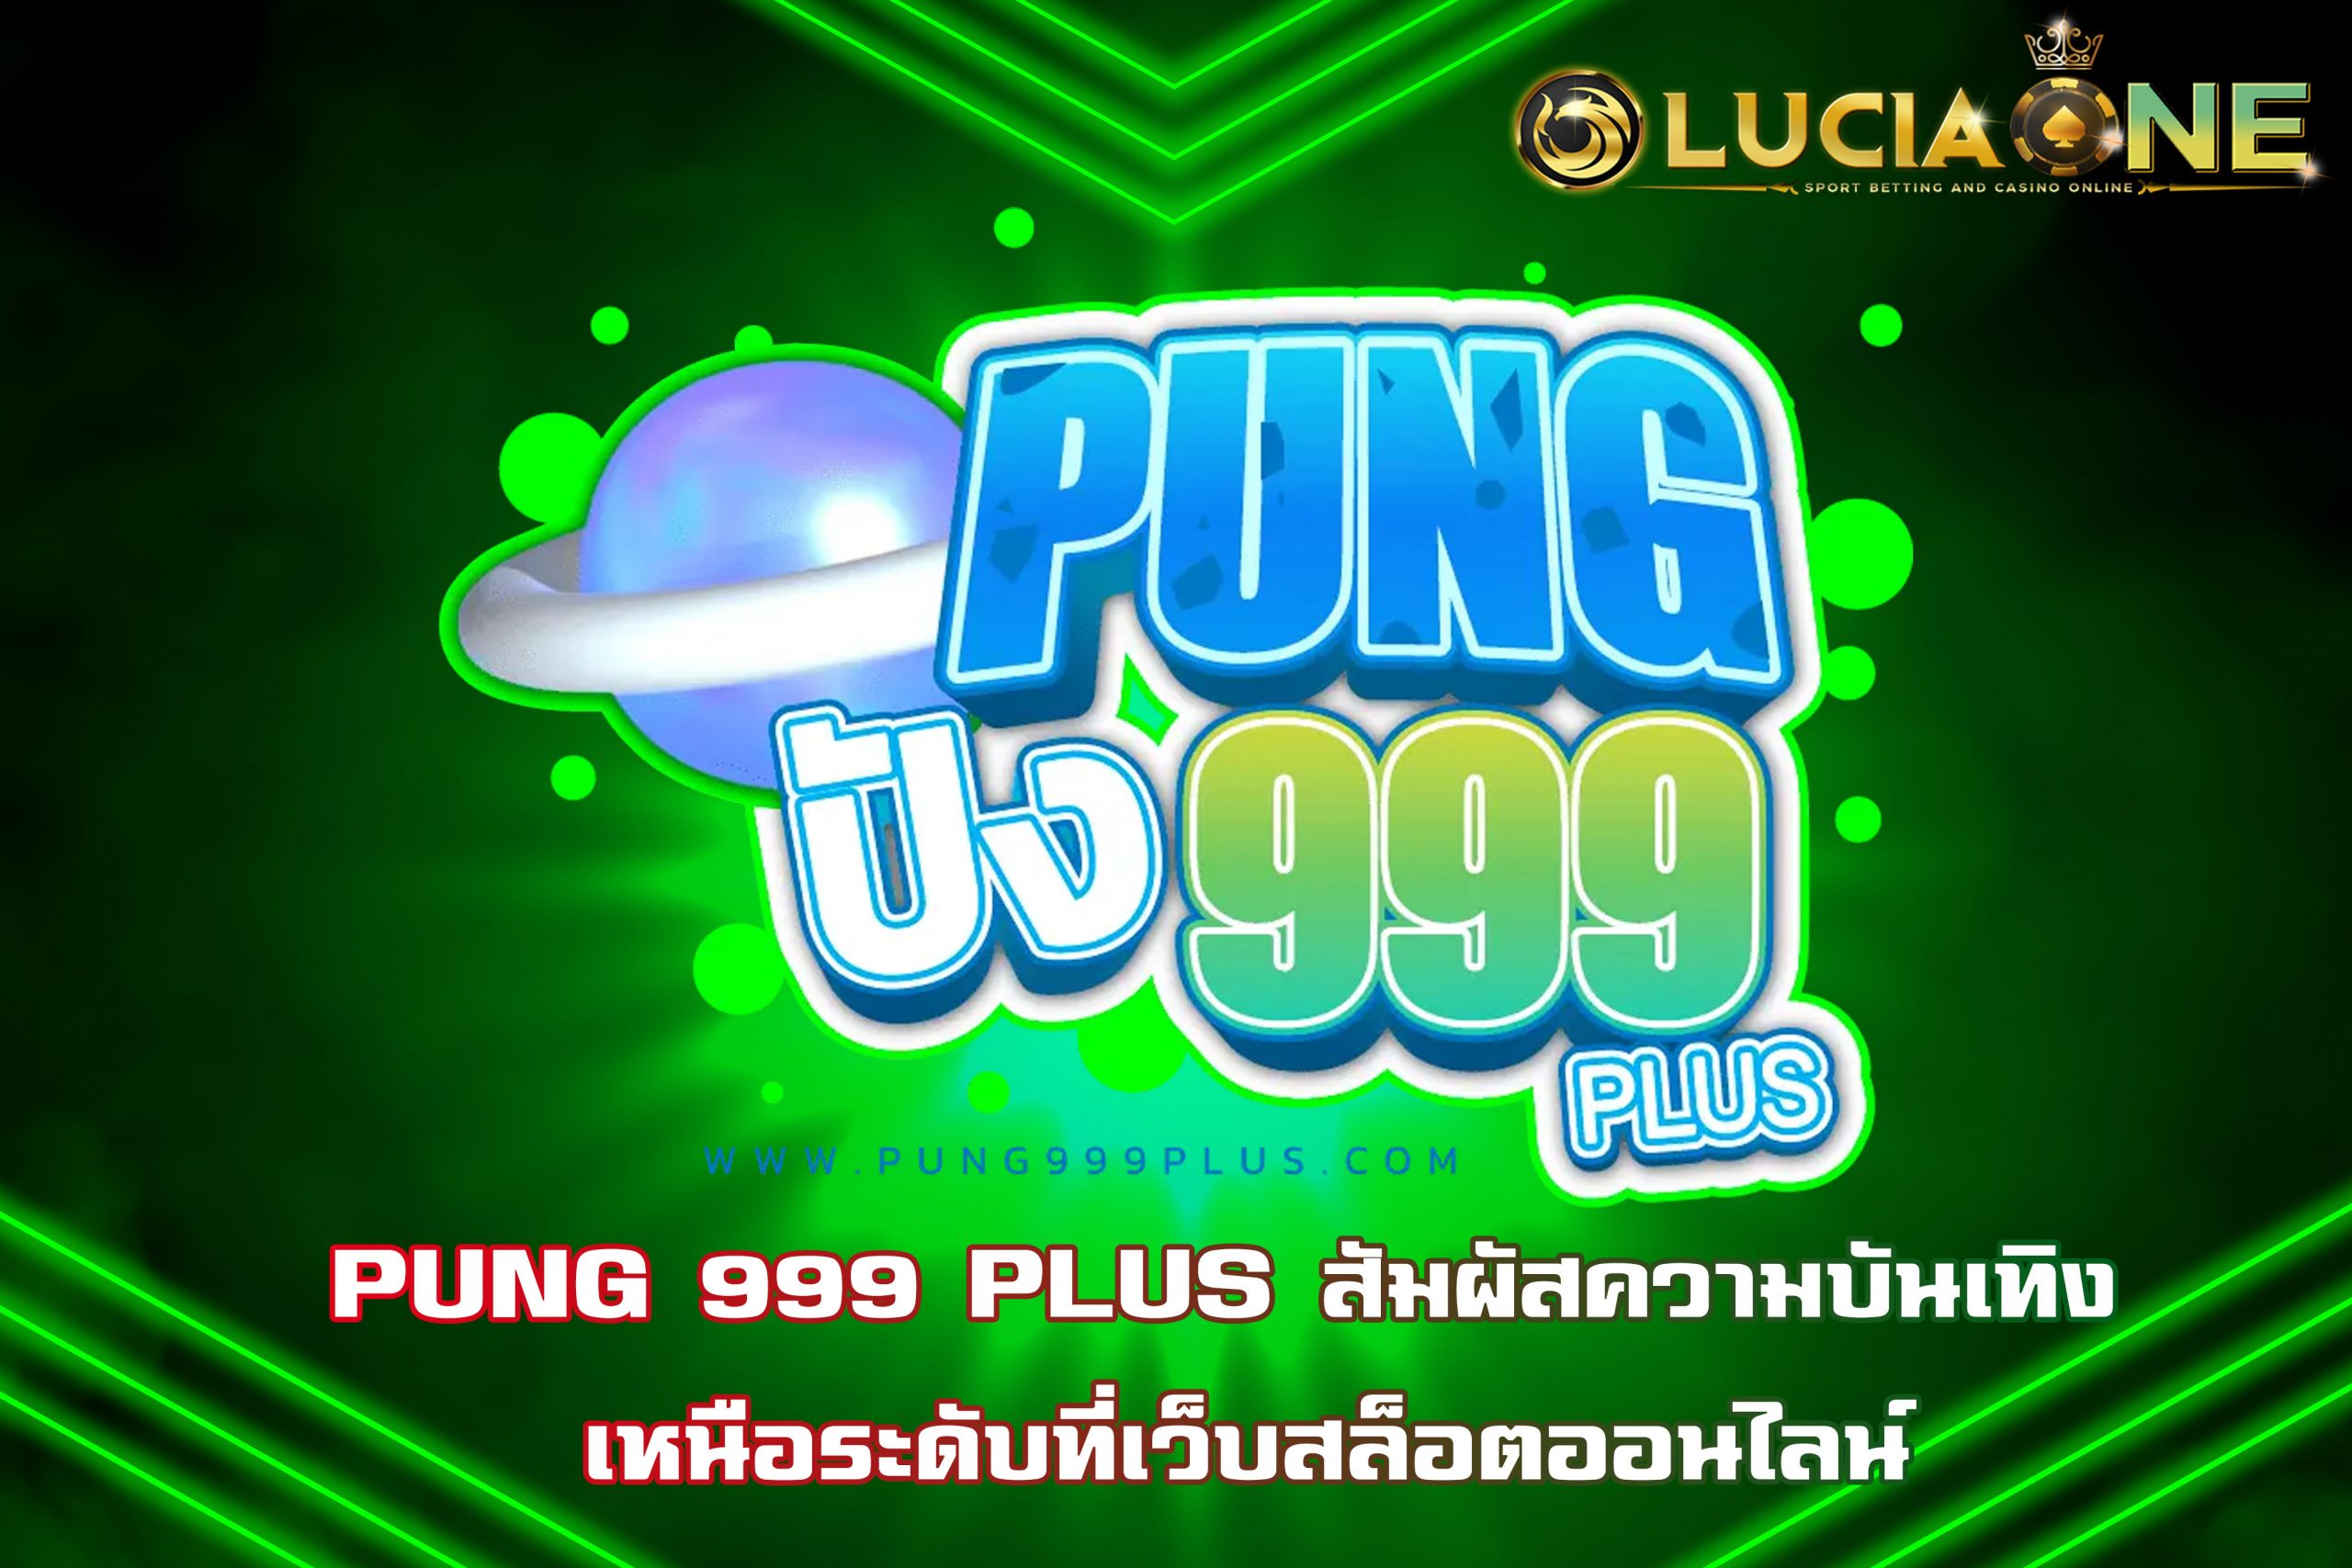 PUNG 999 PLUS สัมผัสความบันเทิง เหนือระดับที่เว็บสล็อตออนไลน์